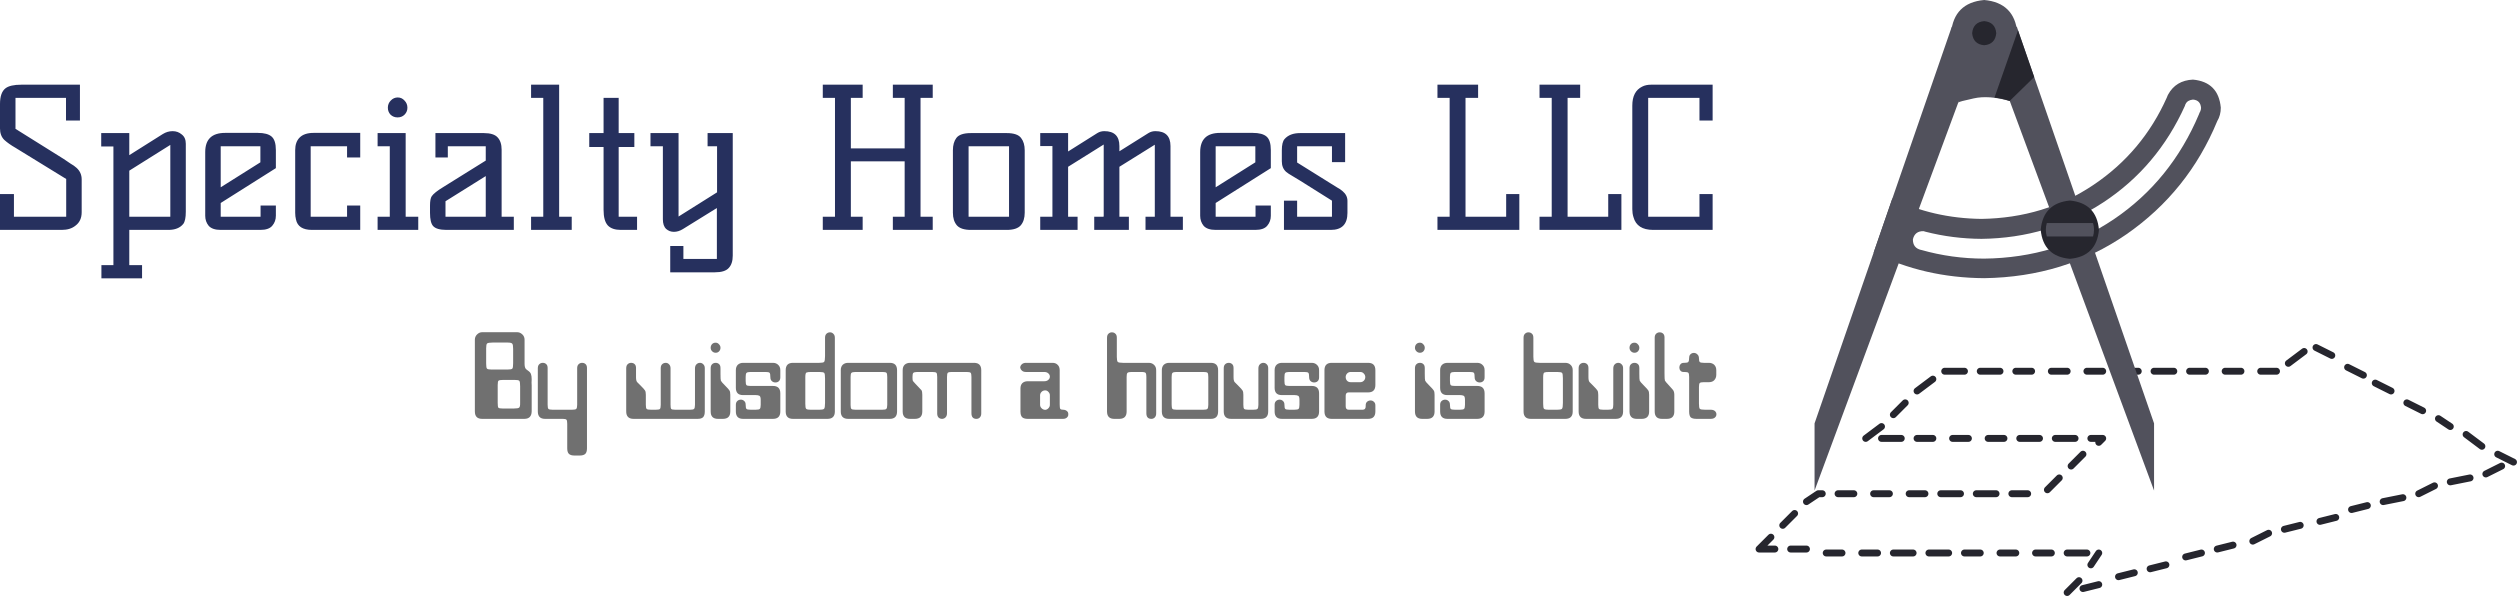 Specialty Homes LLC